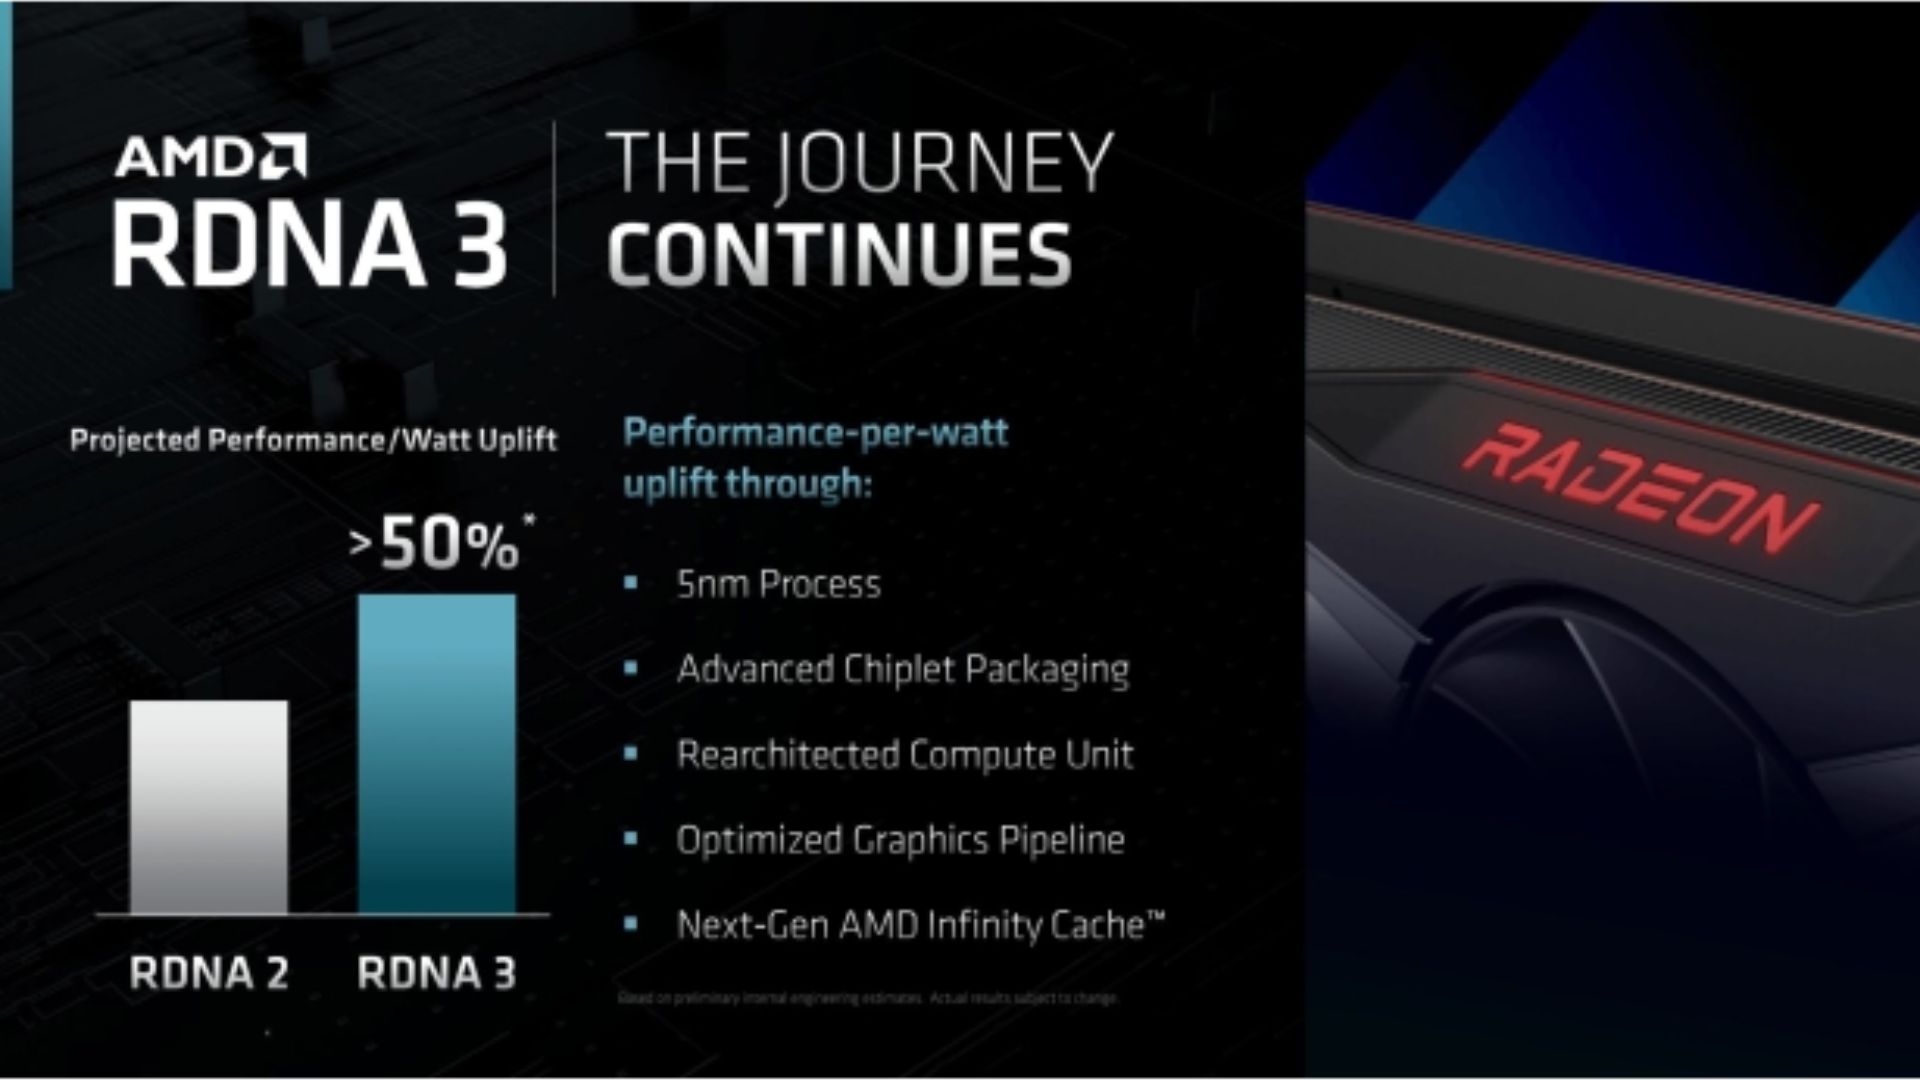 AMD NVIDIA is pushing cutting-edge GPU power utilization